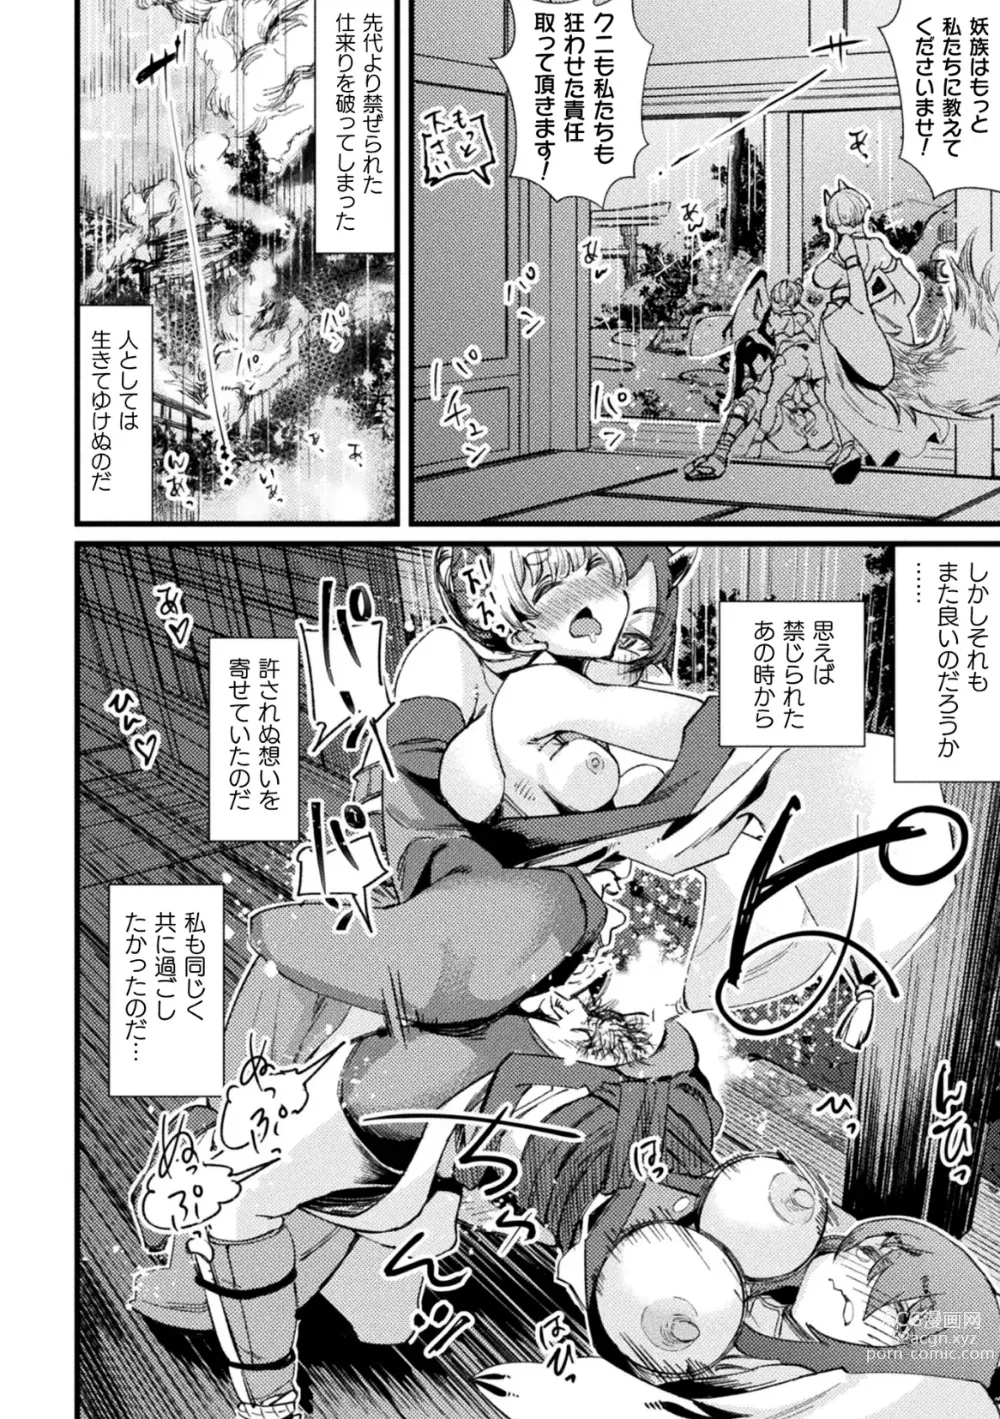 Page 162 of manga Kukkoro Heroines Vol. 35